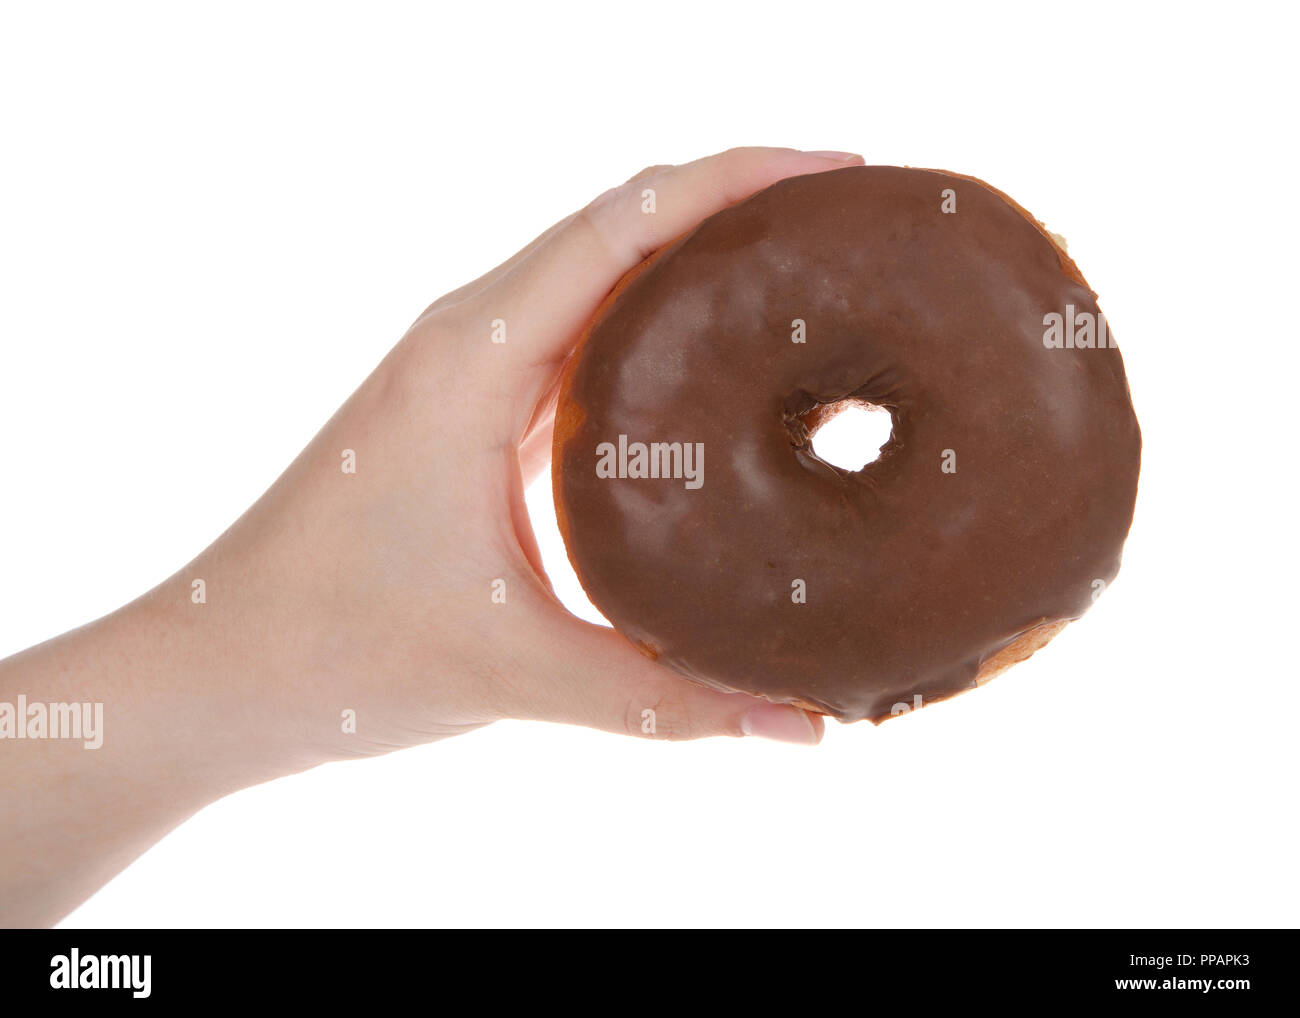 Young hand holding one chocolate glazed round donut isolated on white background. Stock Photo